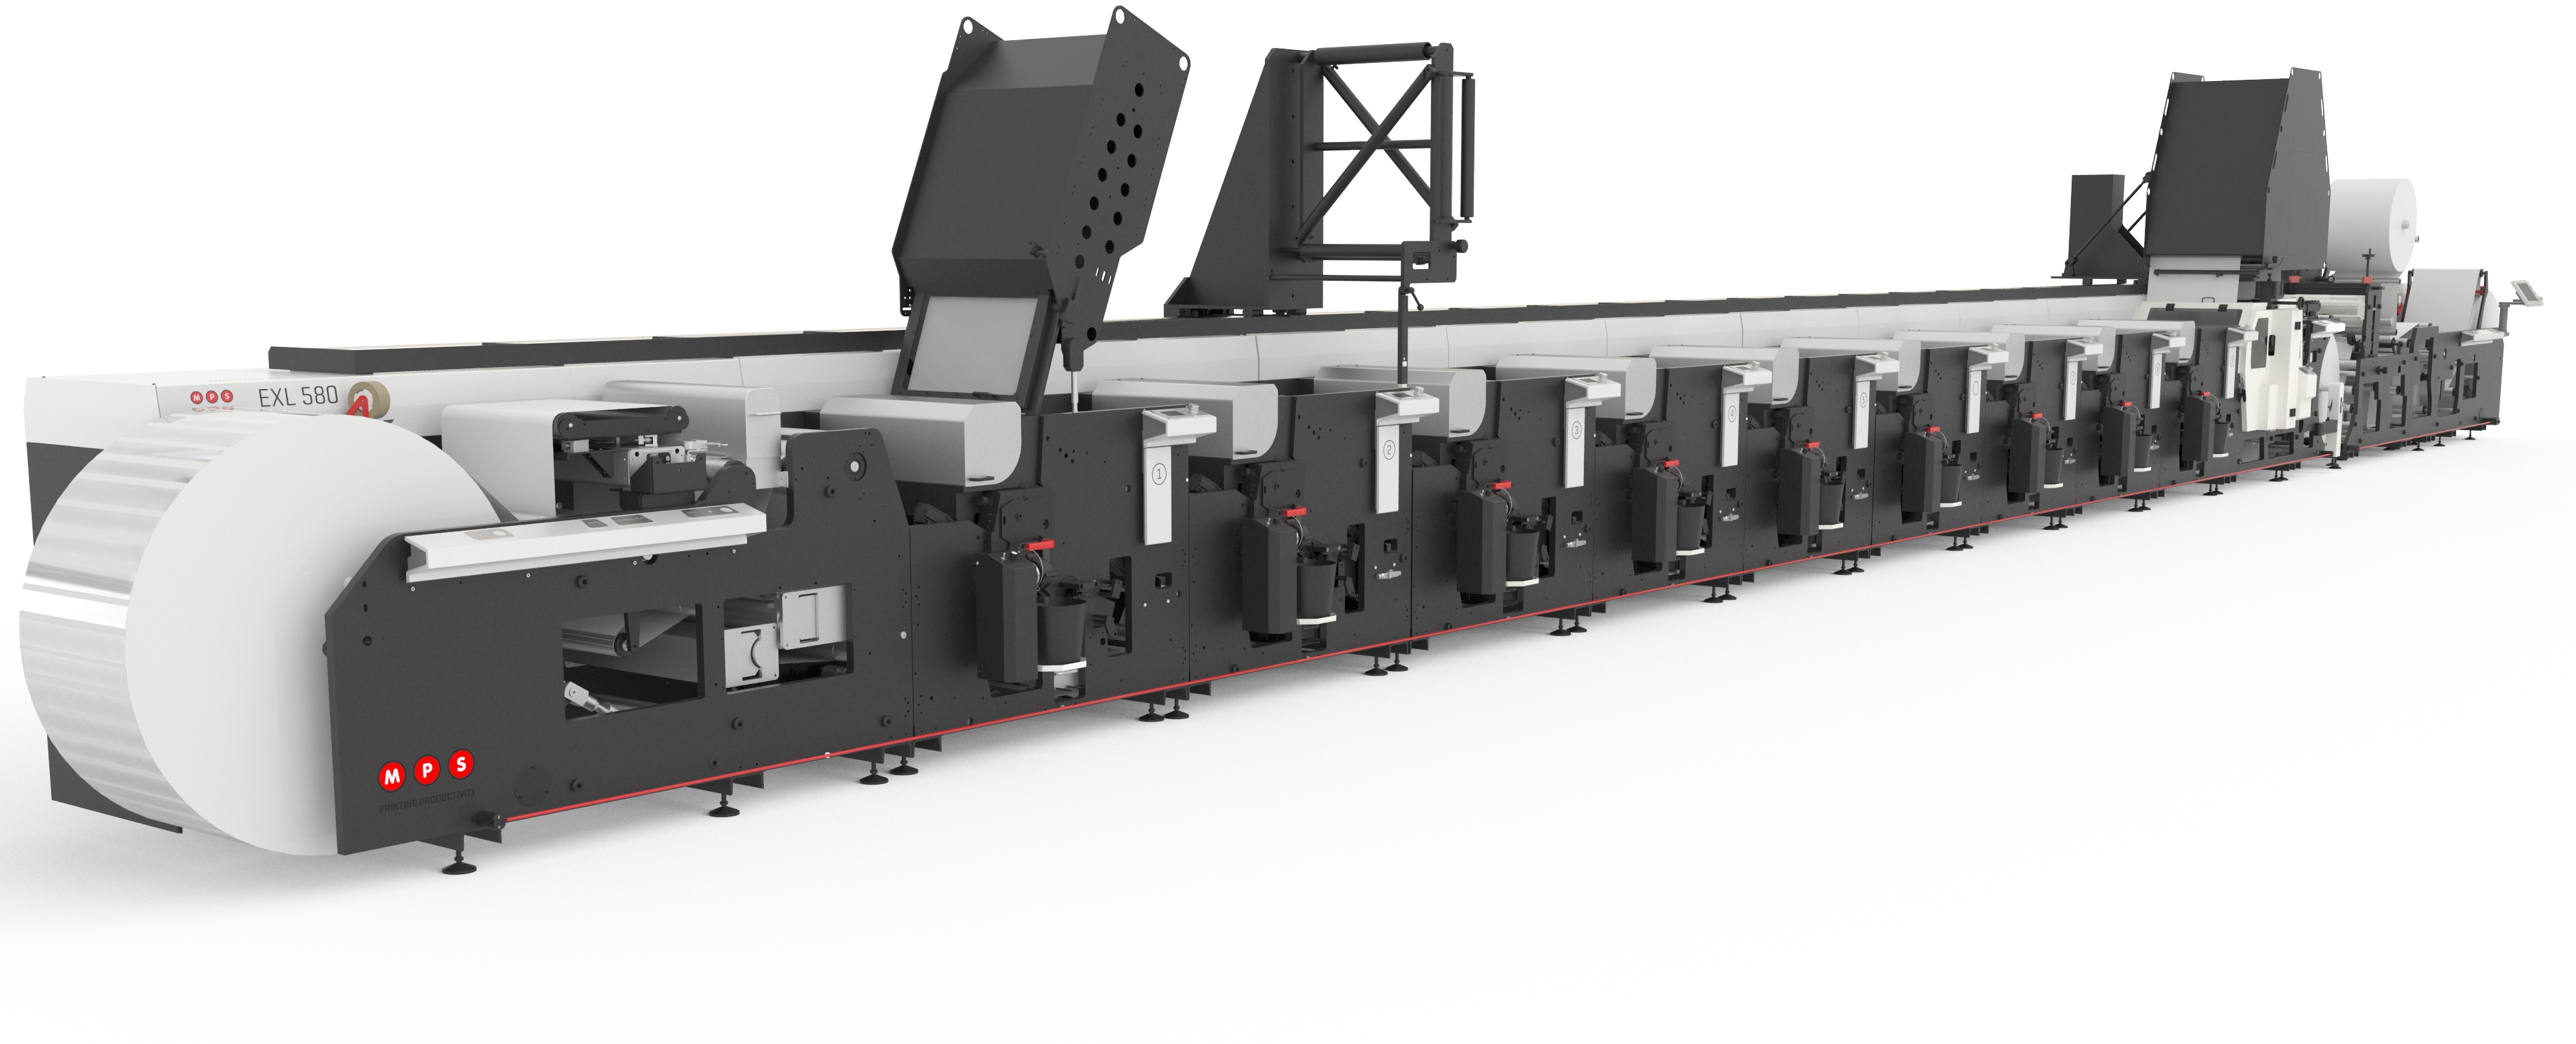 MPS provides flexo, offset and hybrid printing presses